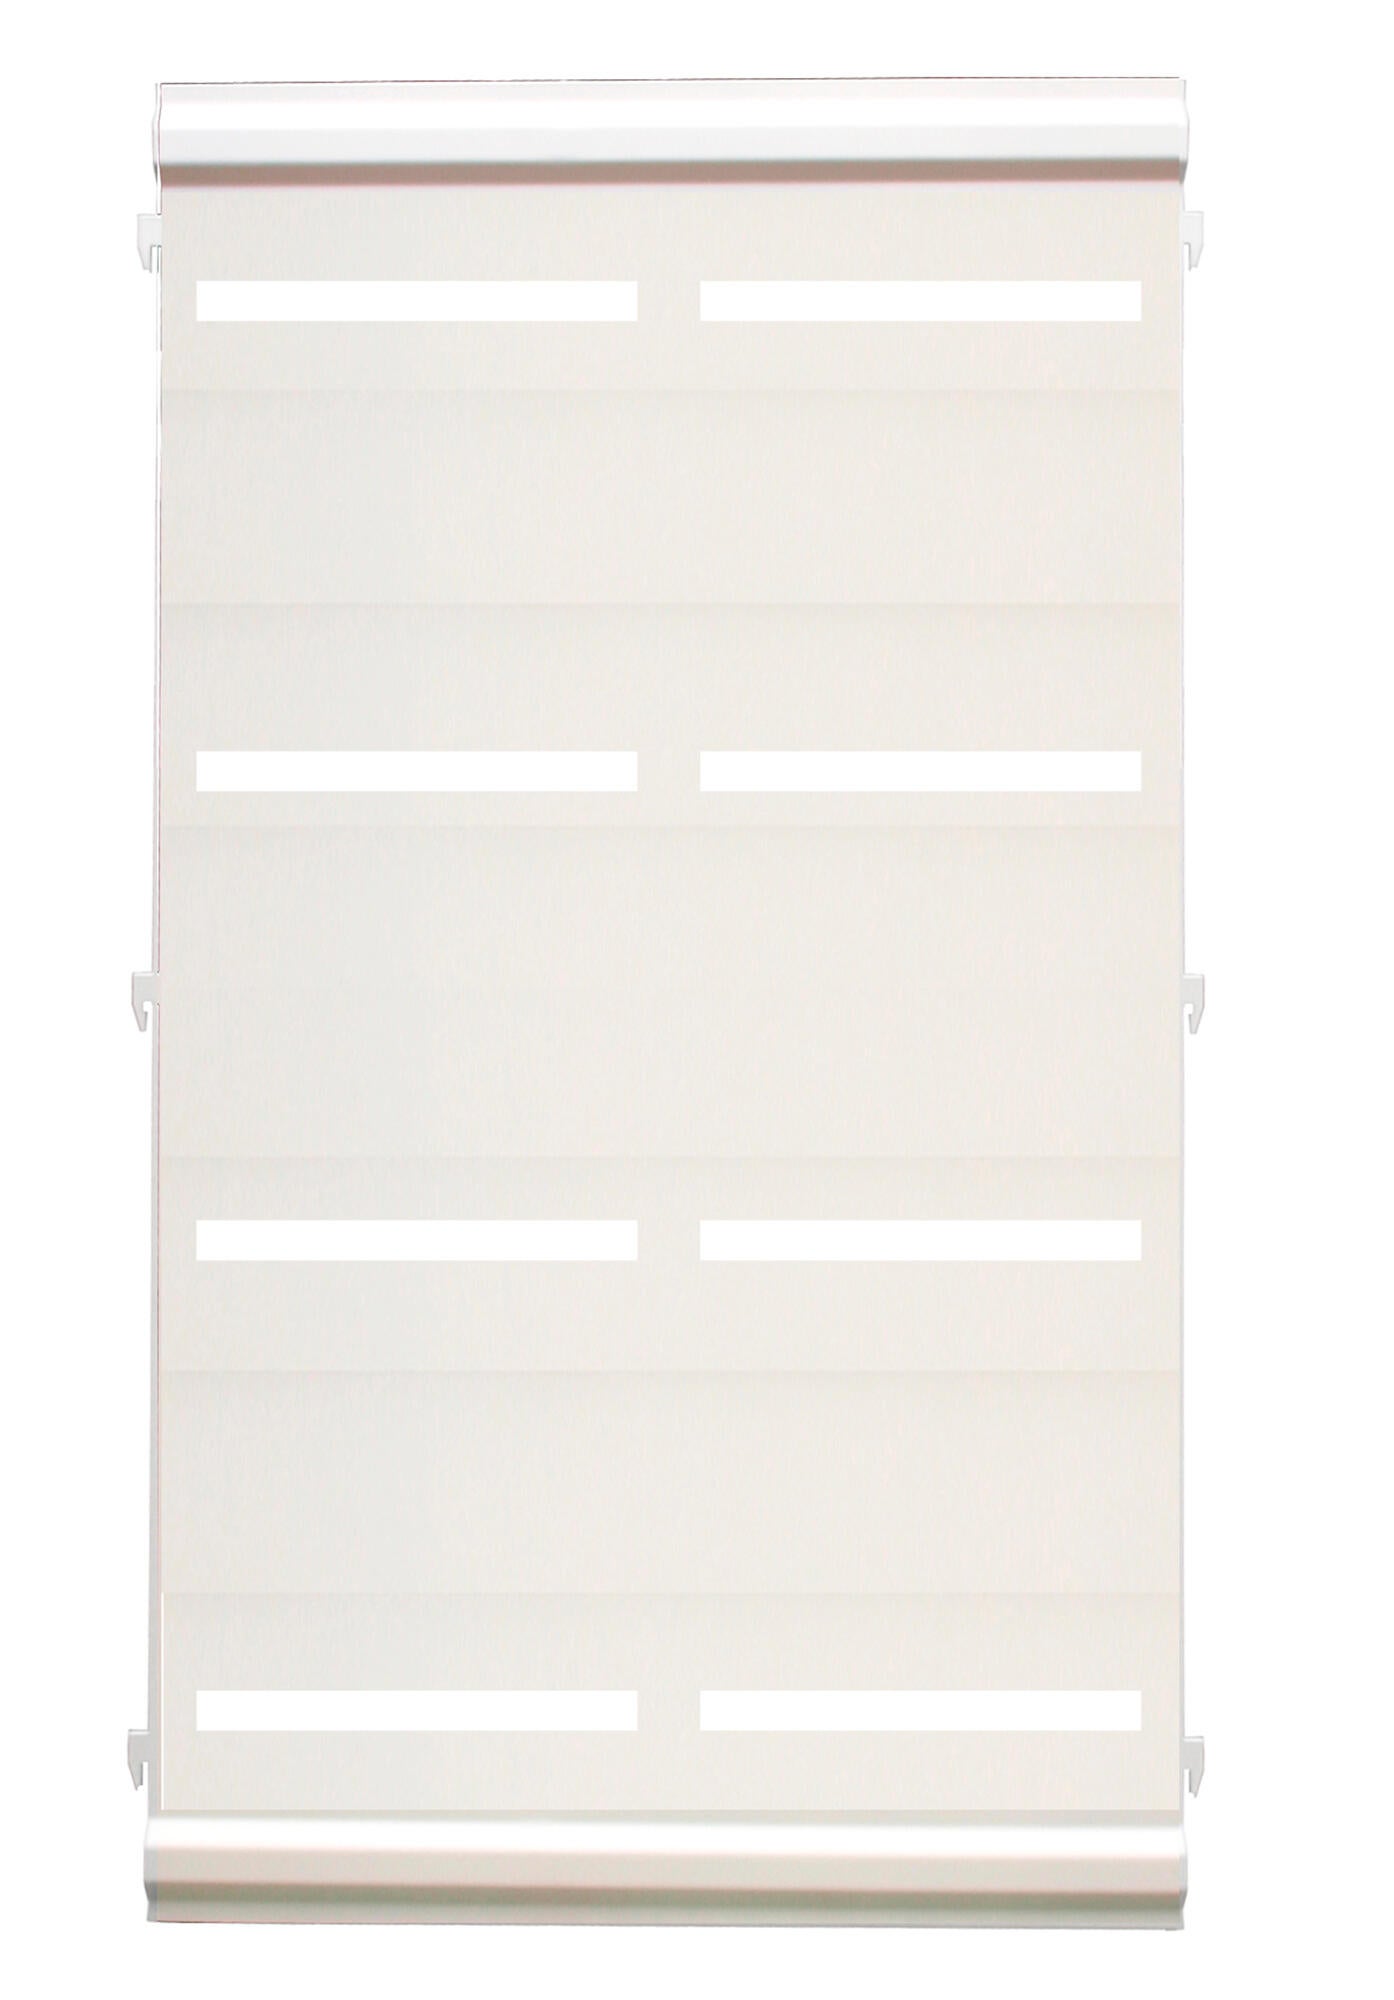 Panel remate valla acero galvanizado franja rayas blanco 94x52,5 cm